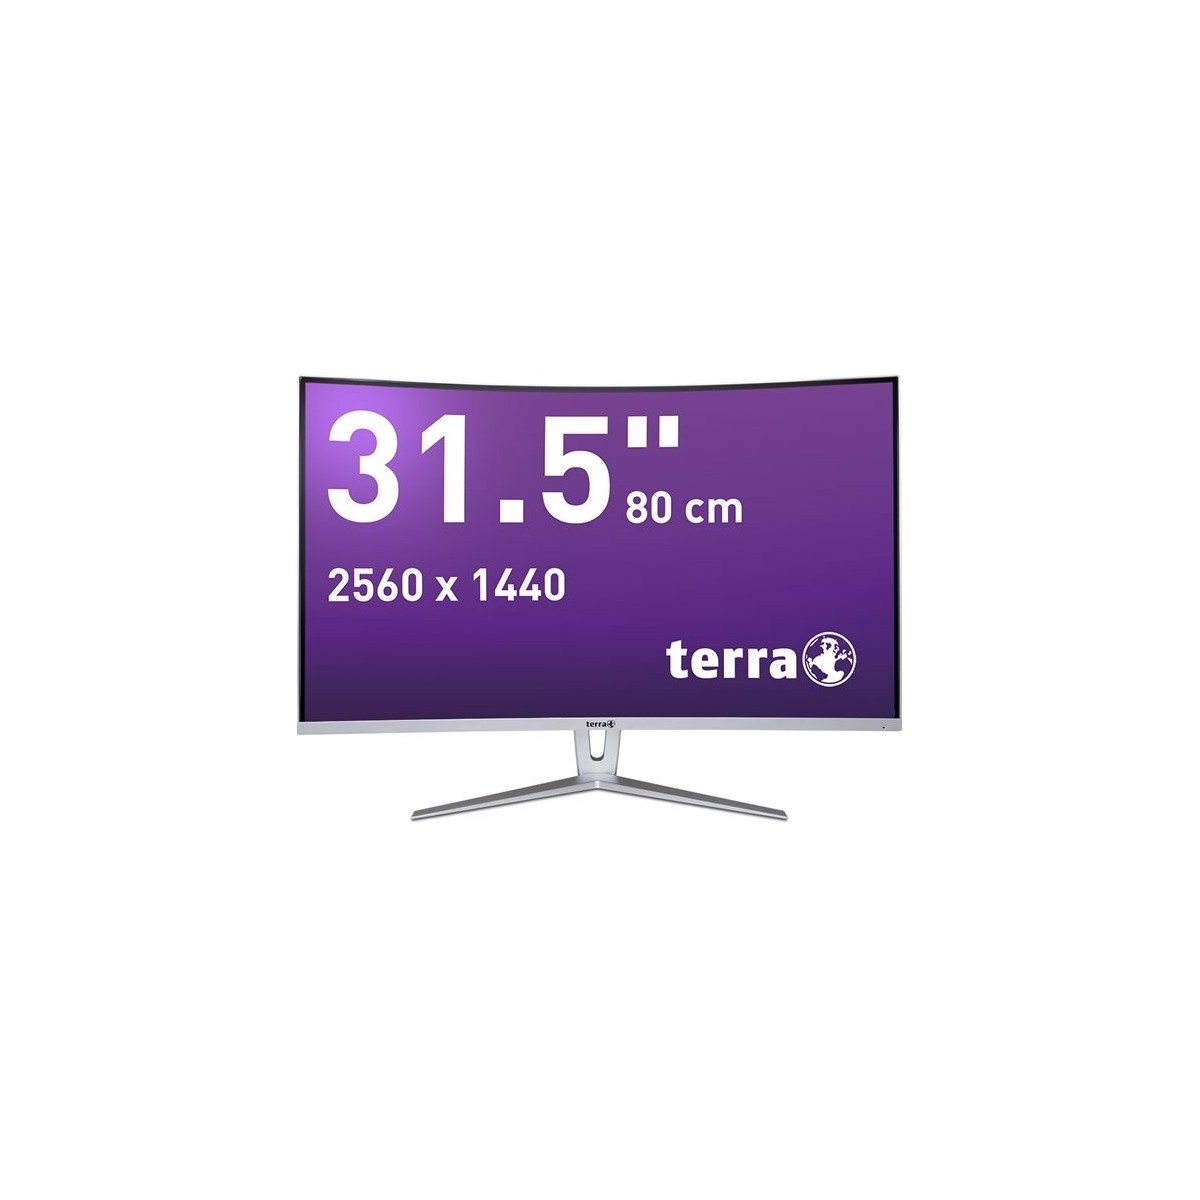 TERRA LCD-LED 3280W - 80 cm (31.5) - 2560 x 1440 pixels - Quad HD - LED - LED - Silver - White